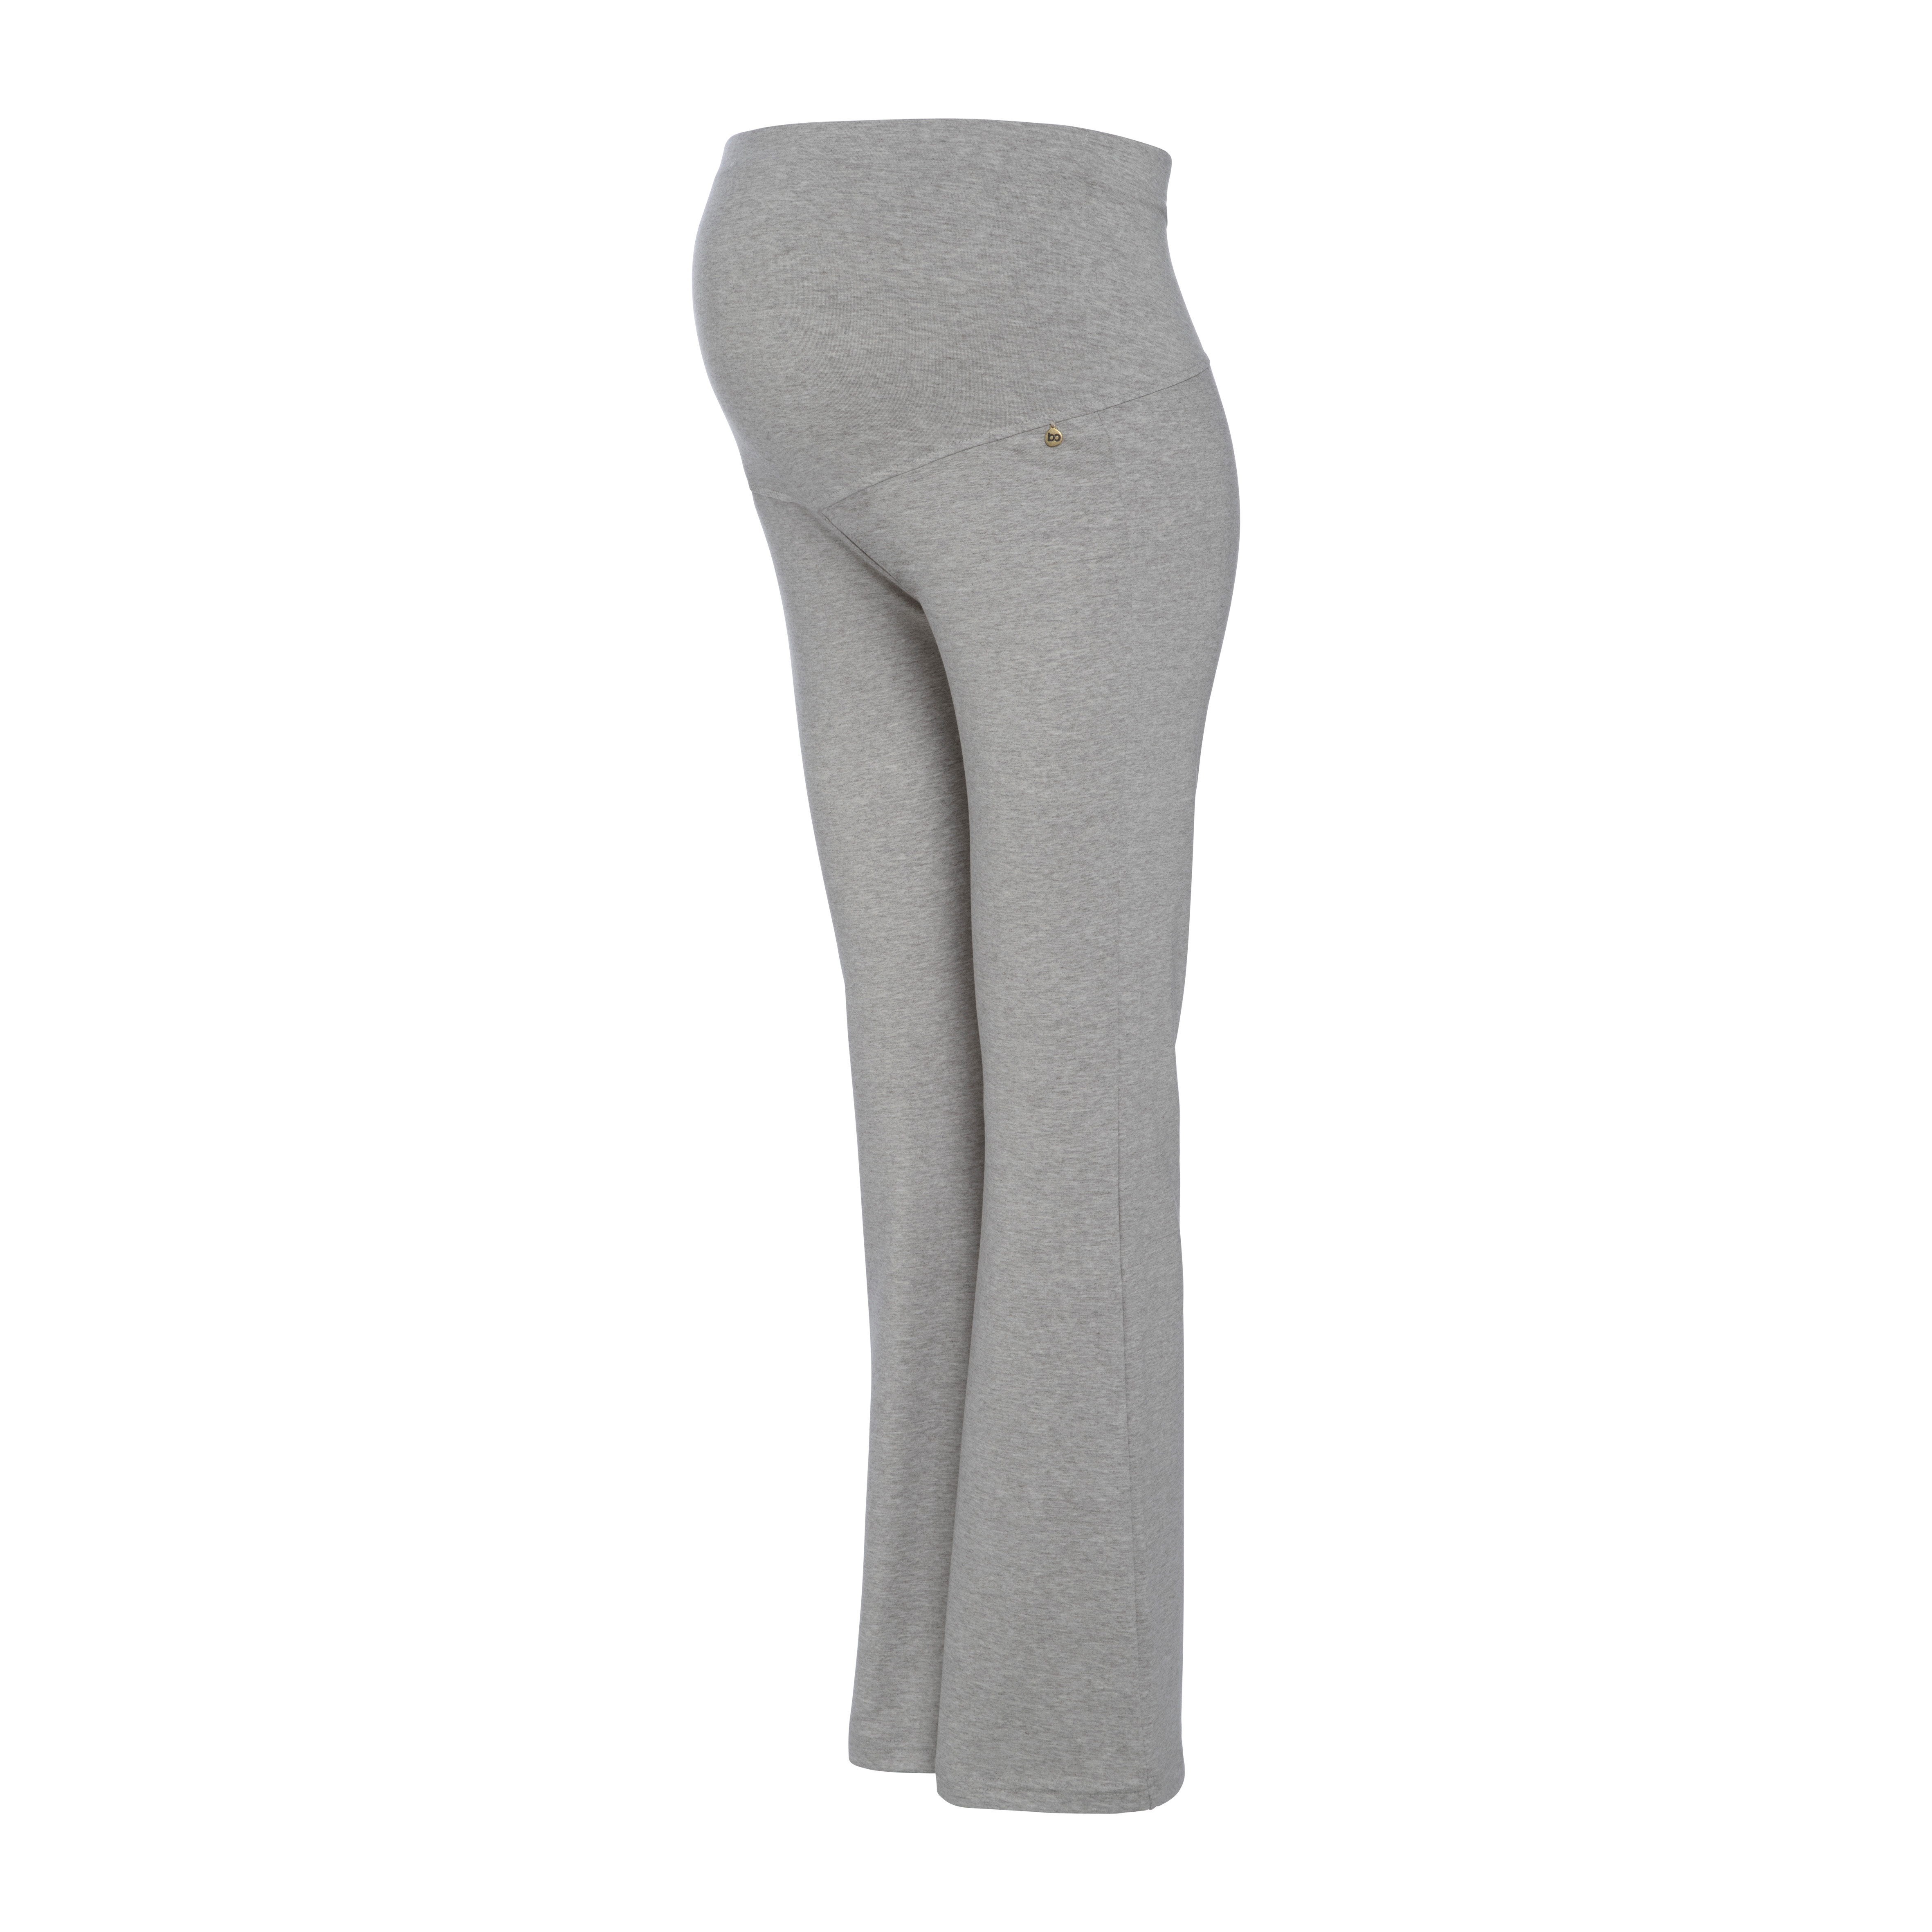 Flared pantalon de maternité Glow dusty grey - M